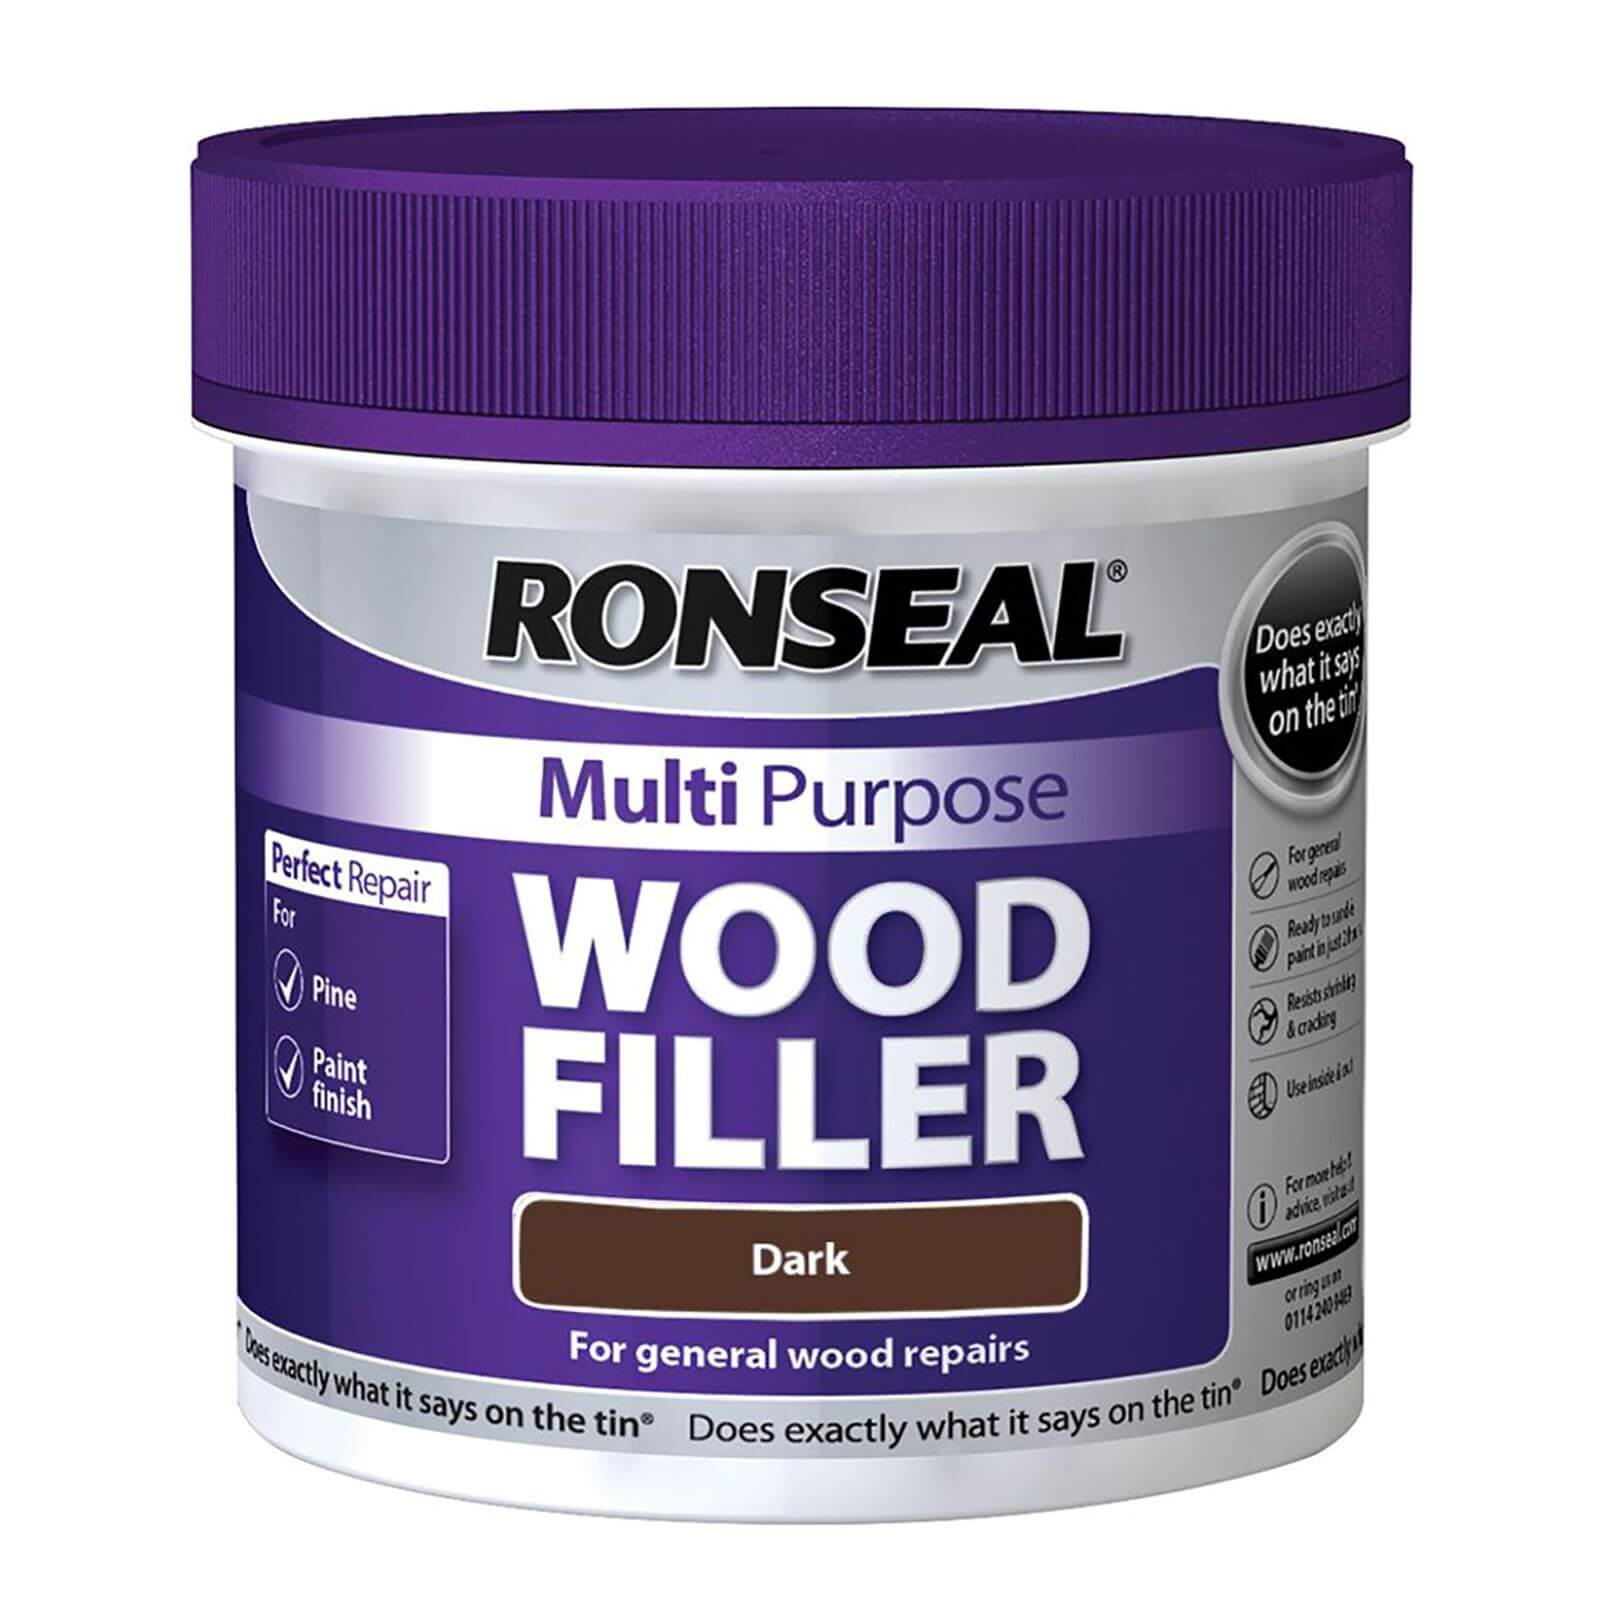 Ronseal Multipurpose Wood Filler Tub - Dark - 465g